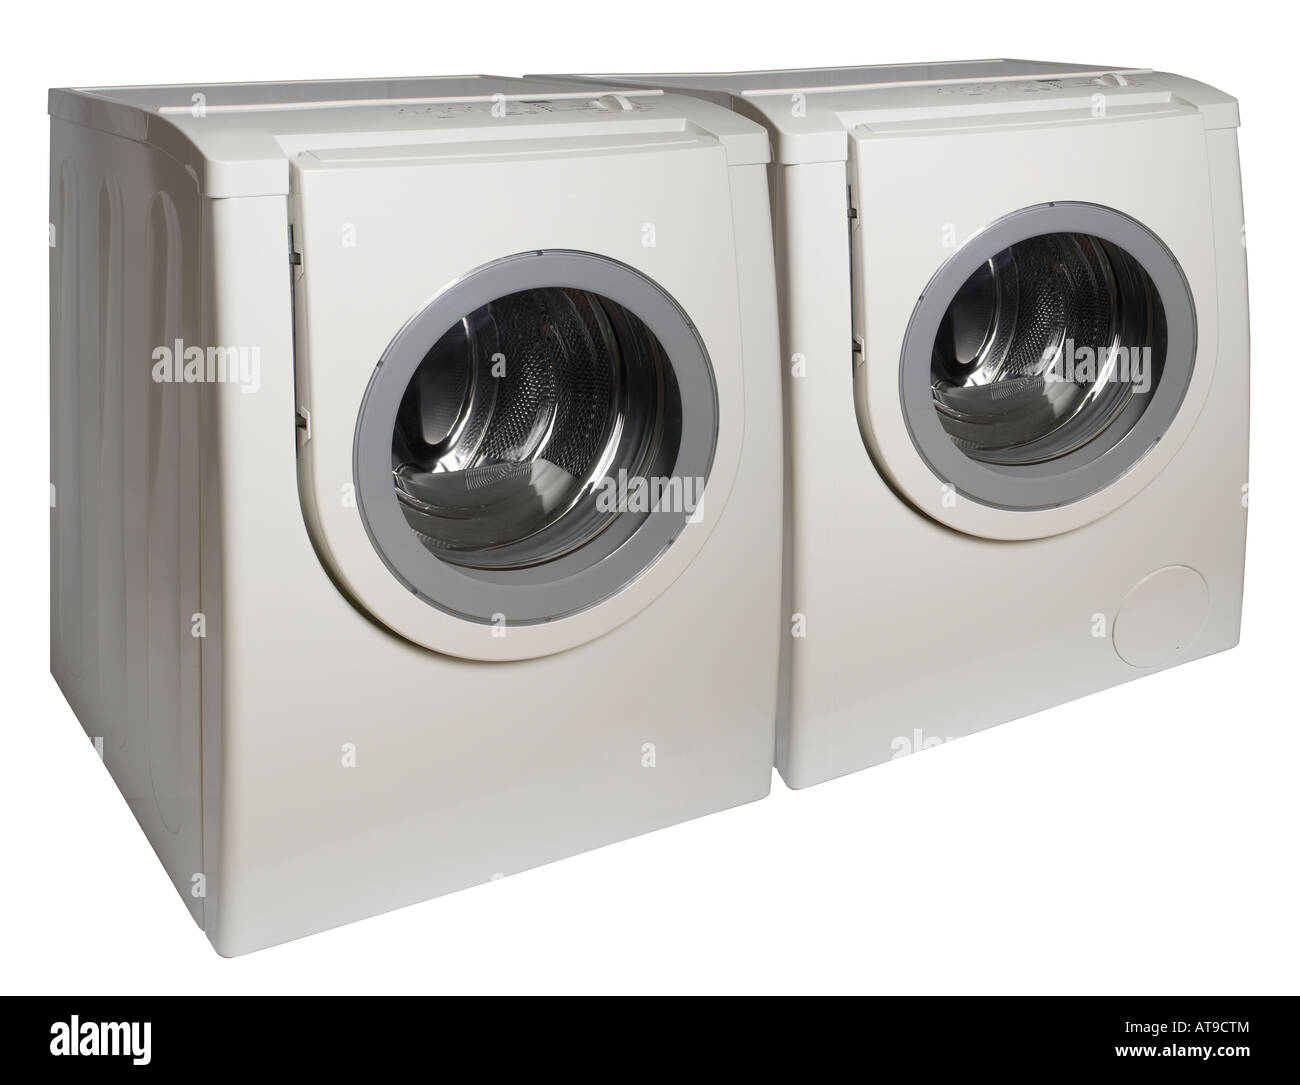 Lavadora secadora Imágenes recortadas de stock - Alamy